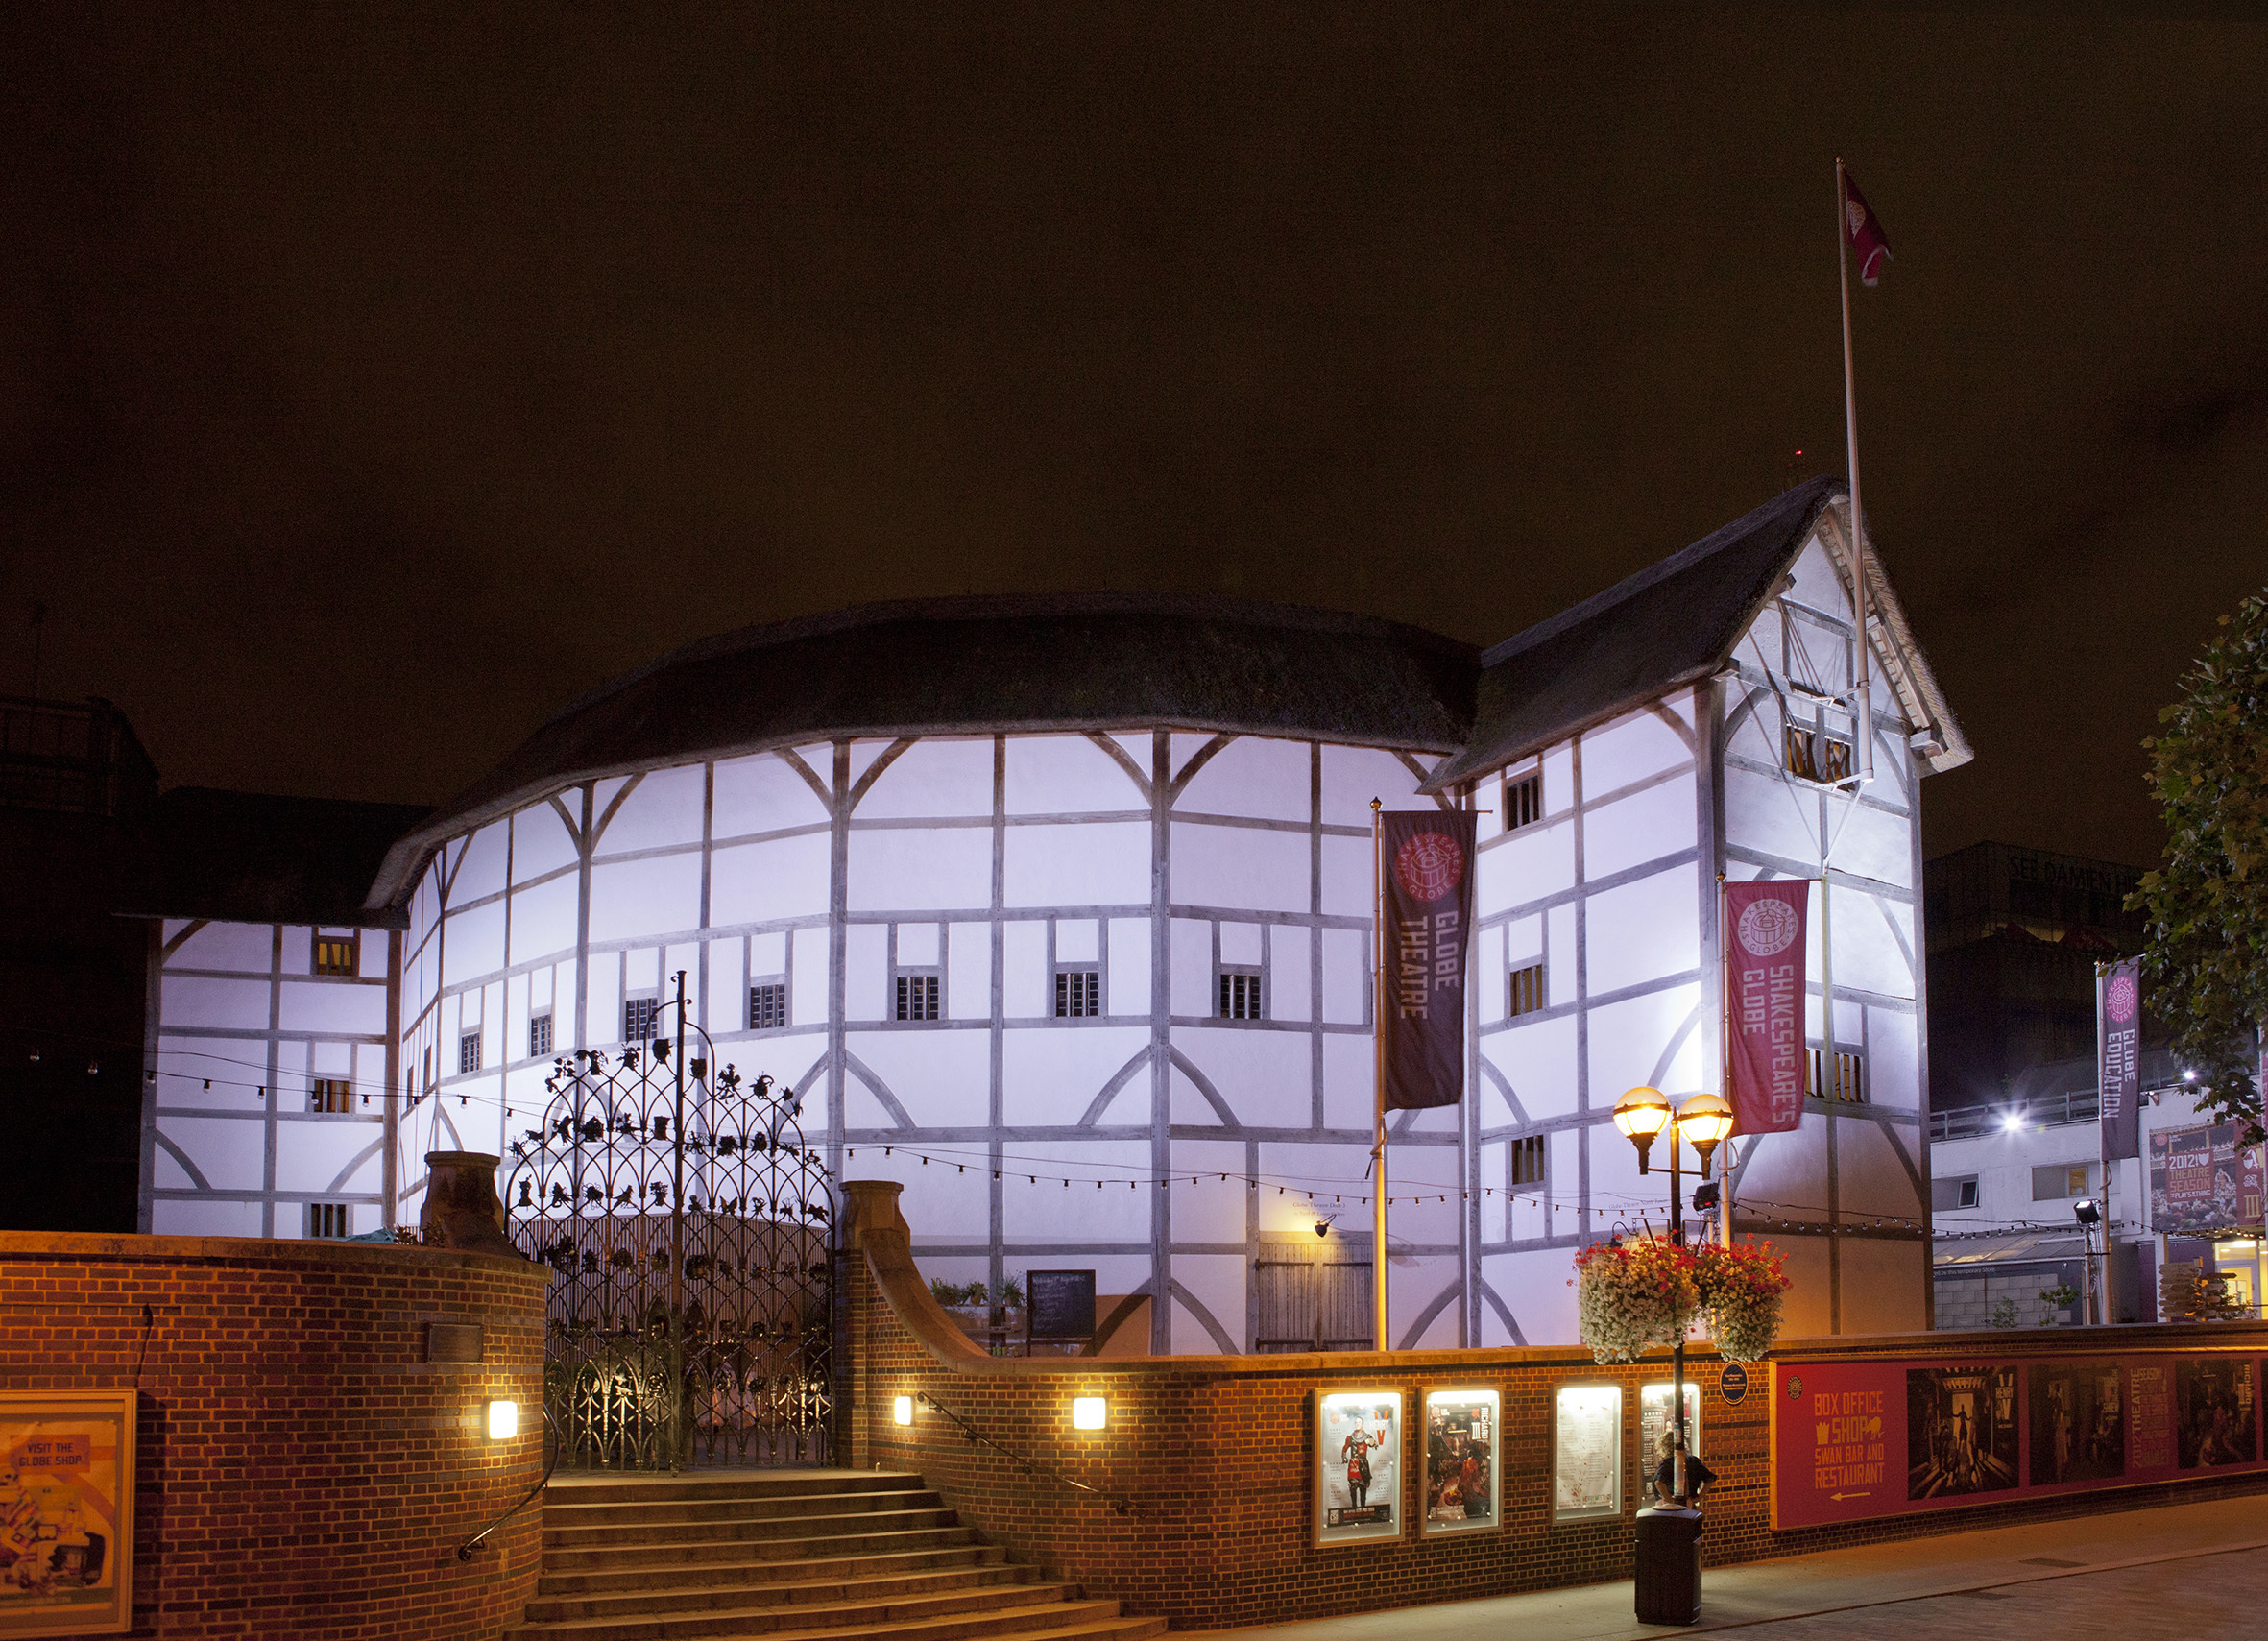 Shakespeare s theatre. Шекспировский театр Глобус в Лондоне. Театр Глобус Шекспира. Театр Шекспира в Лондоне. Вильям Шекспир театр Глобус.